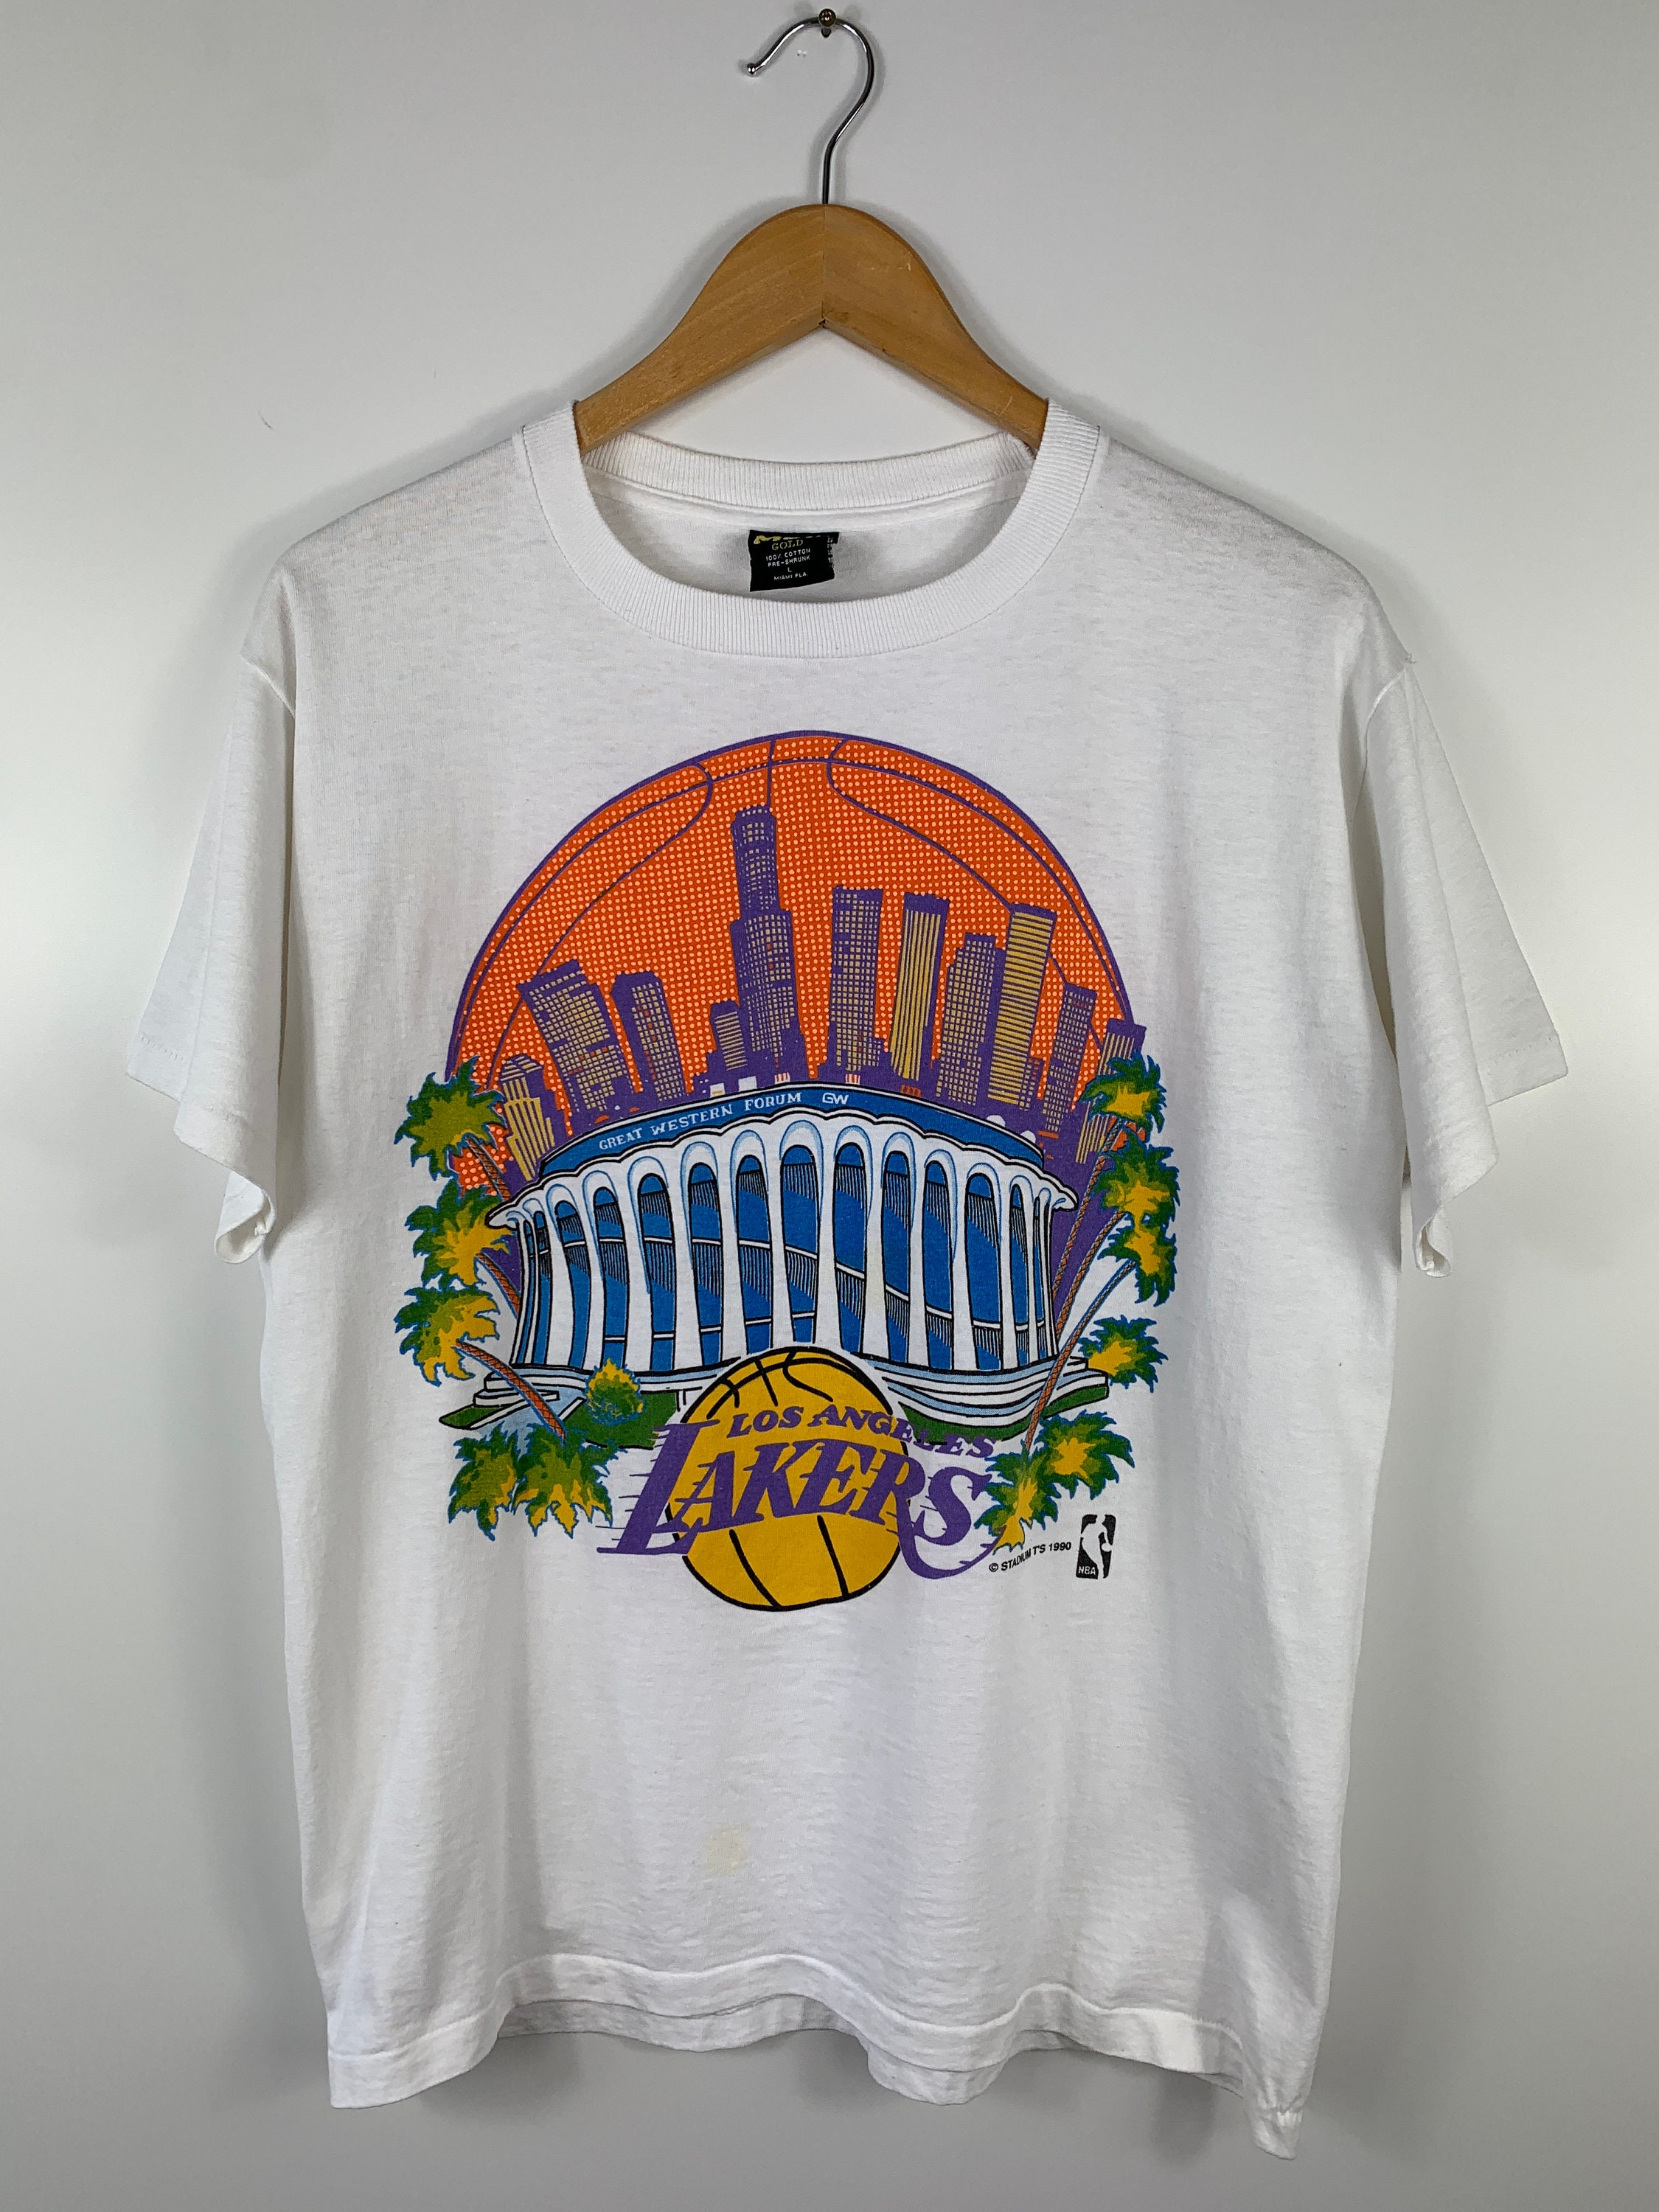 Vintage 2008 Celtics championship tee! Shirt is - Depop